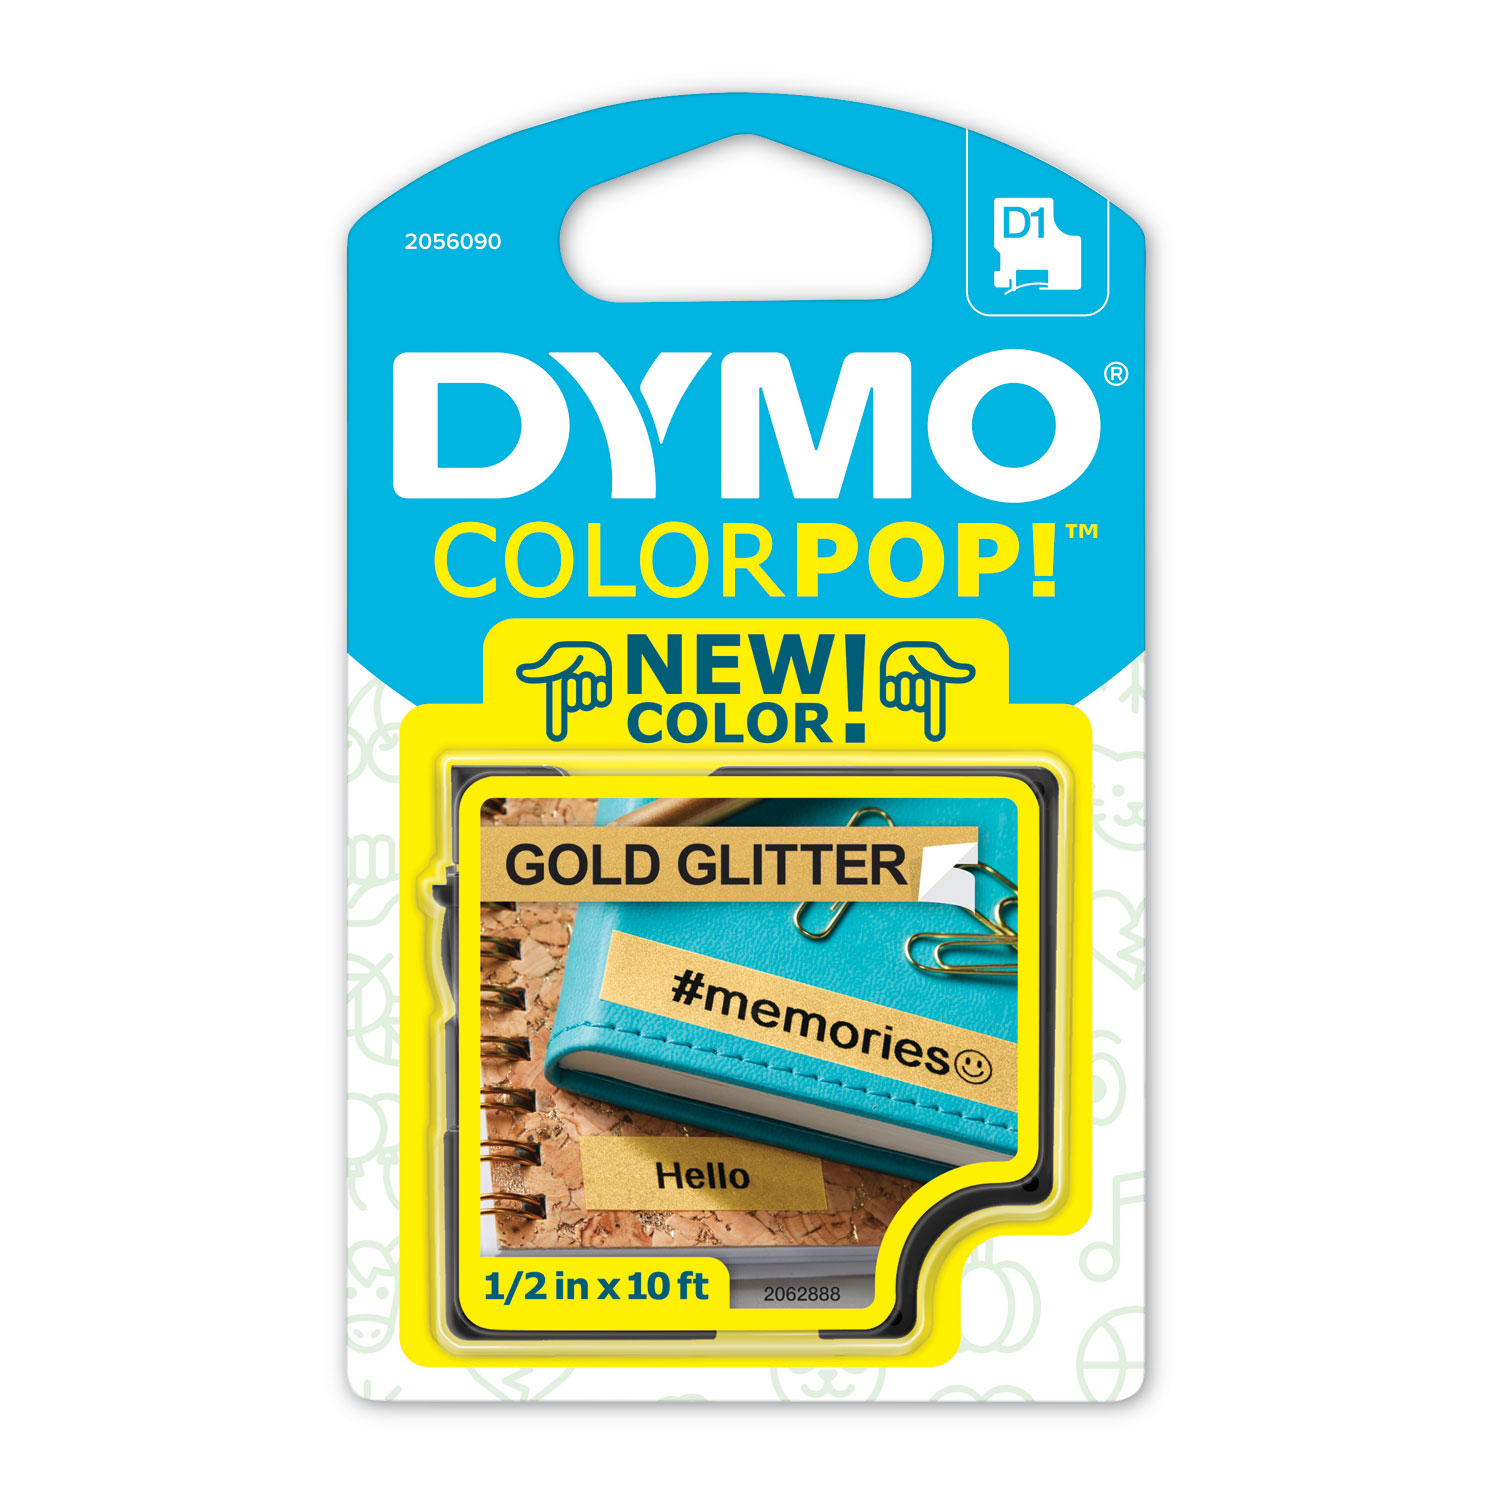  DYMO 2056090 COLORPOP! Label Maker Tape, 0.5 x 10 ft, Black on Gold (DYM2056090) 